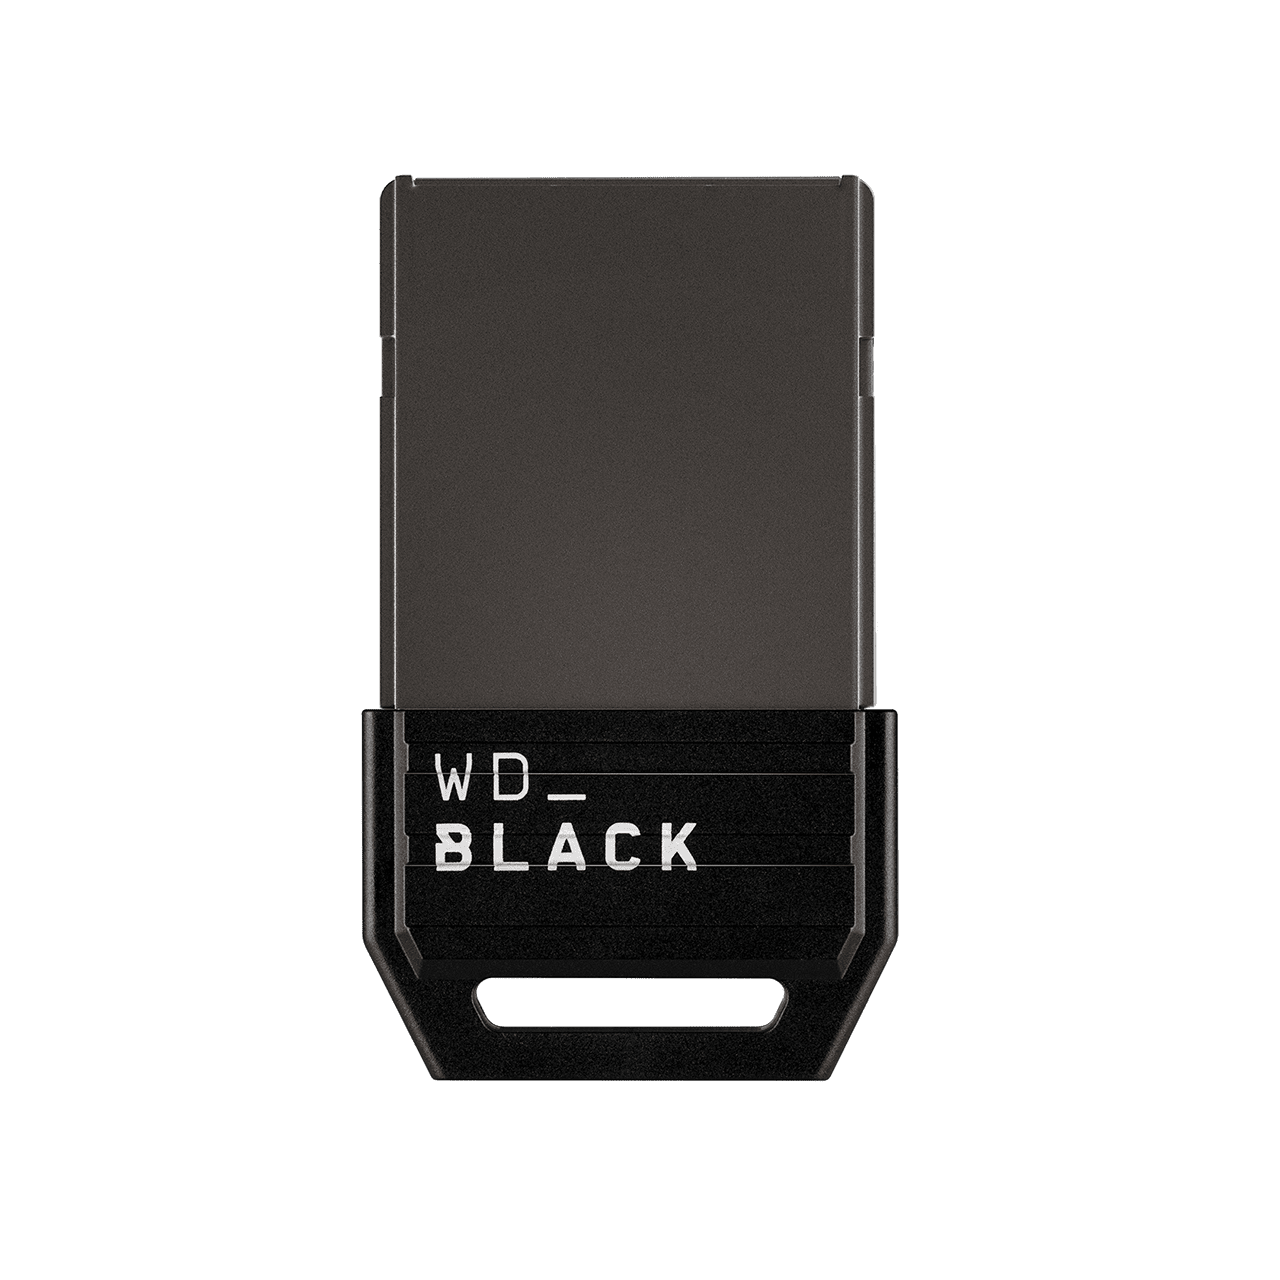 WD_BLACK C50 Plug & Play Memory Expansion Card for Xbox | Western Digital